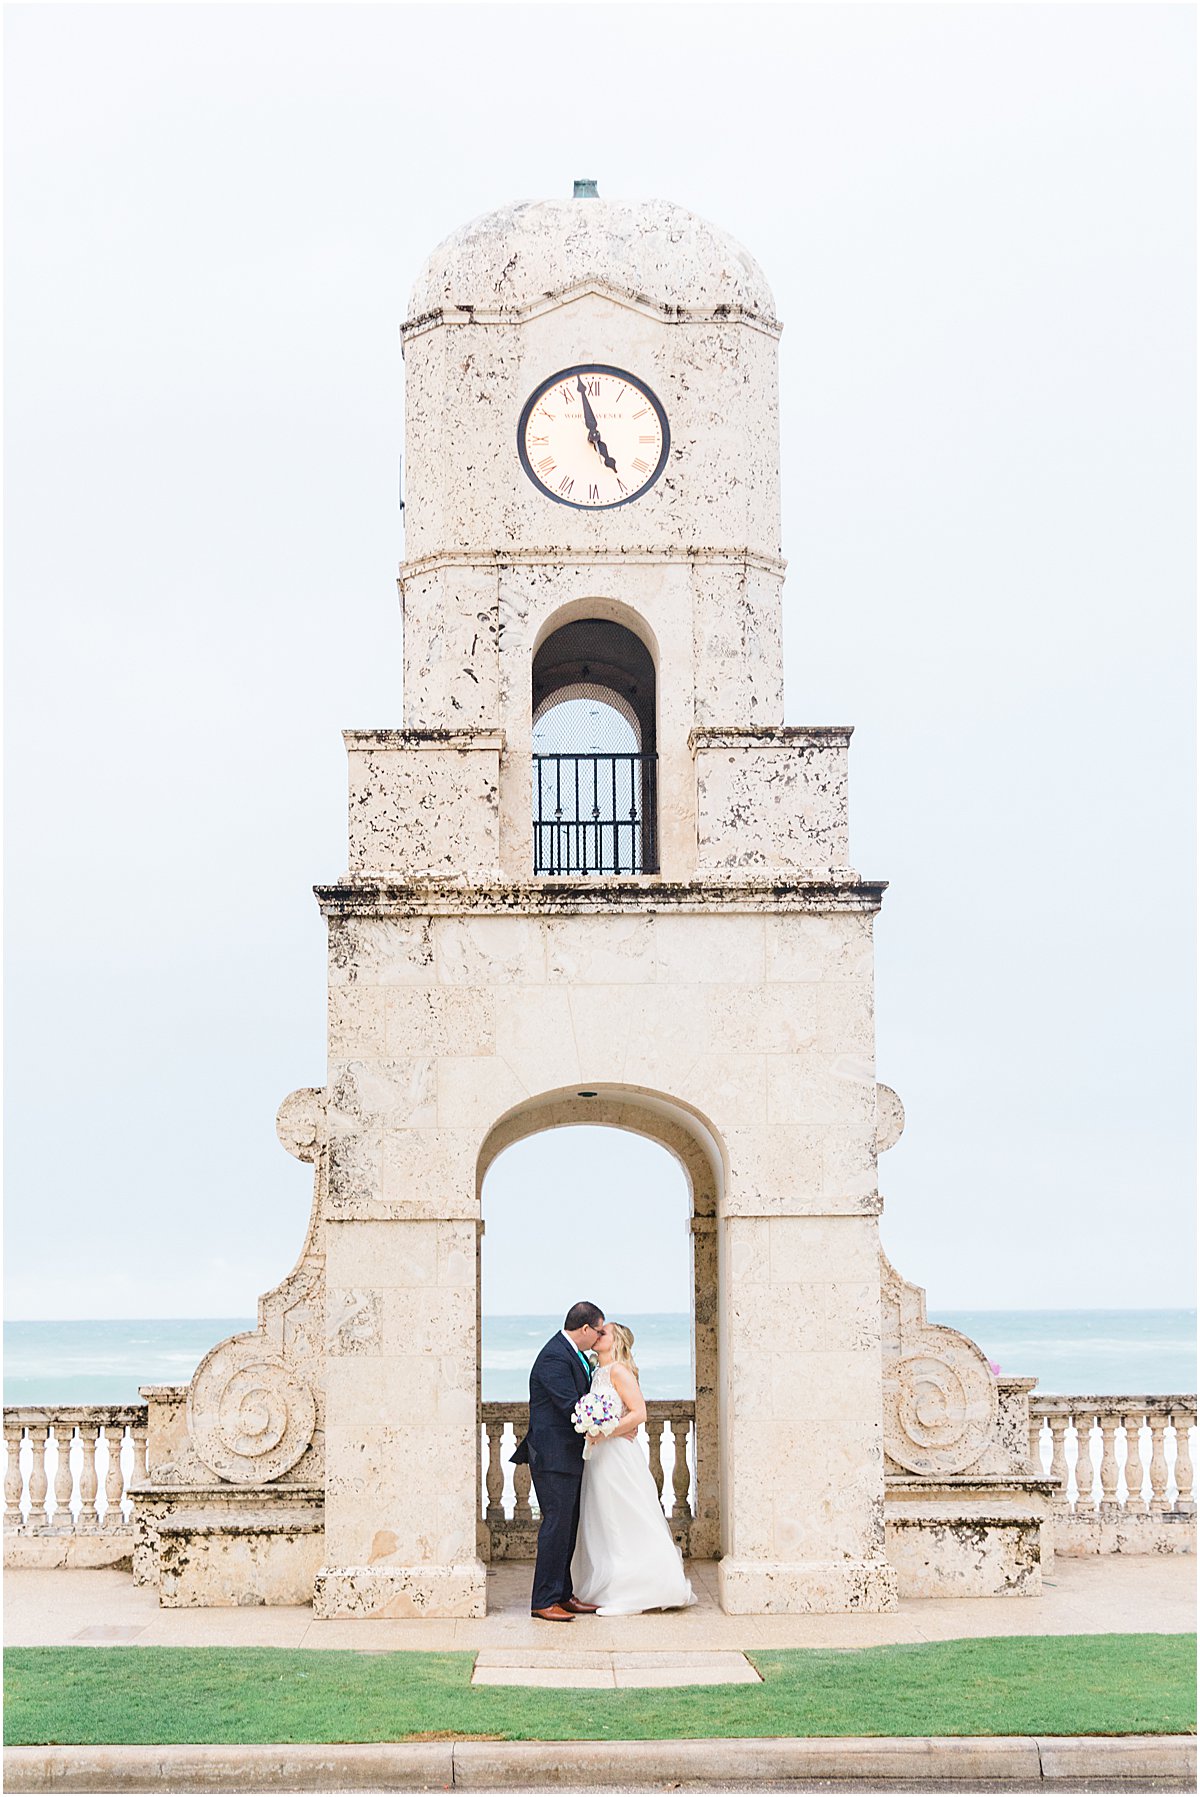 Worth Avenue Clock Tower | The Colony Hotel | Married in Palm Beach | www.marriedinpalmbeach.com | Martin and Gloria Photos